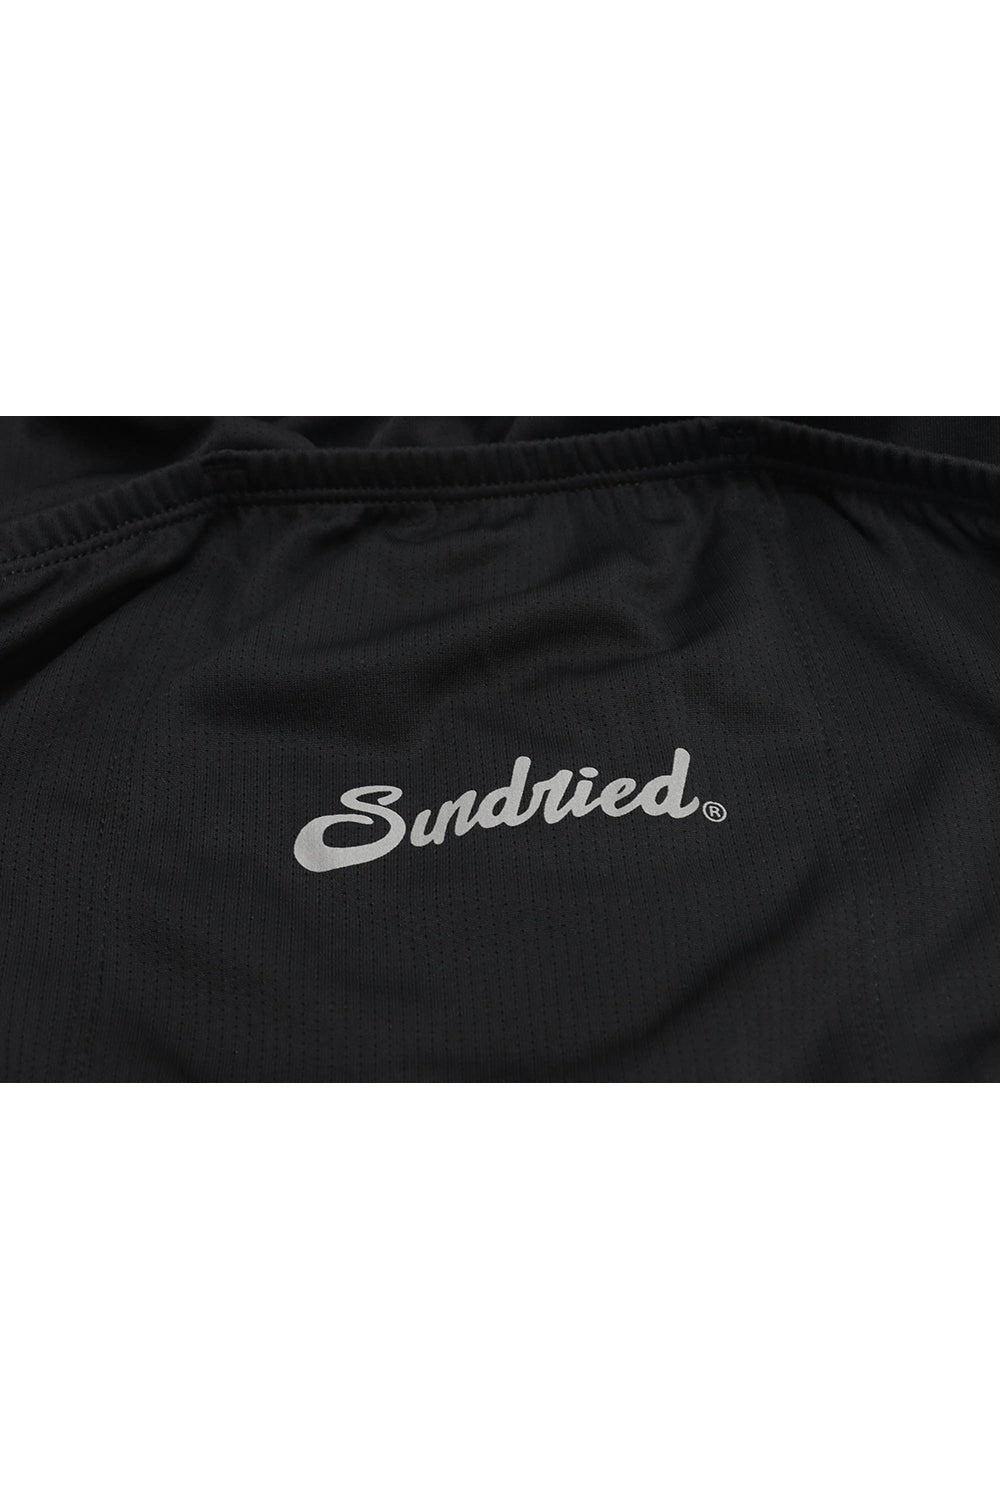 Sundried Sport Women's Black Long Sleeved Cycle Jersey Bib Shorts Activewear